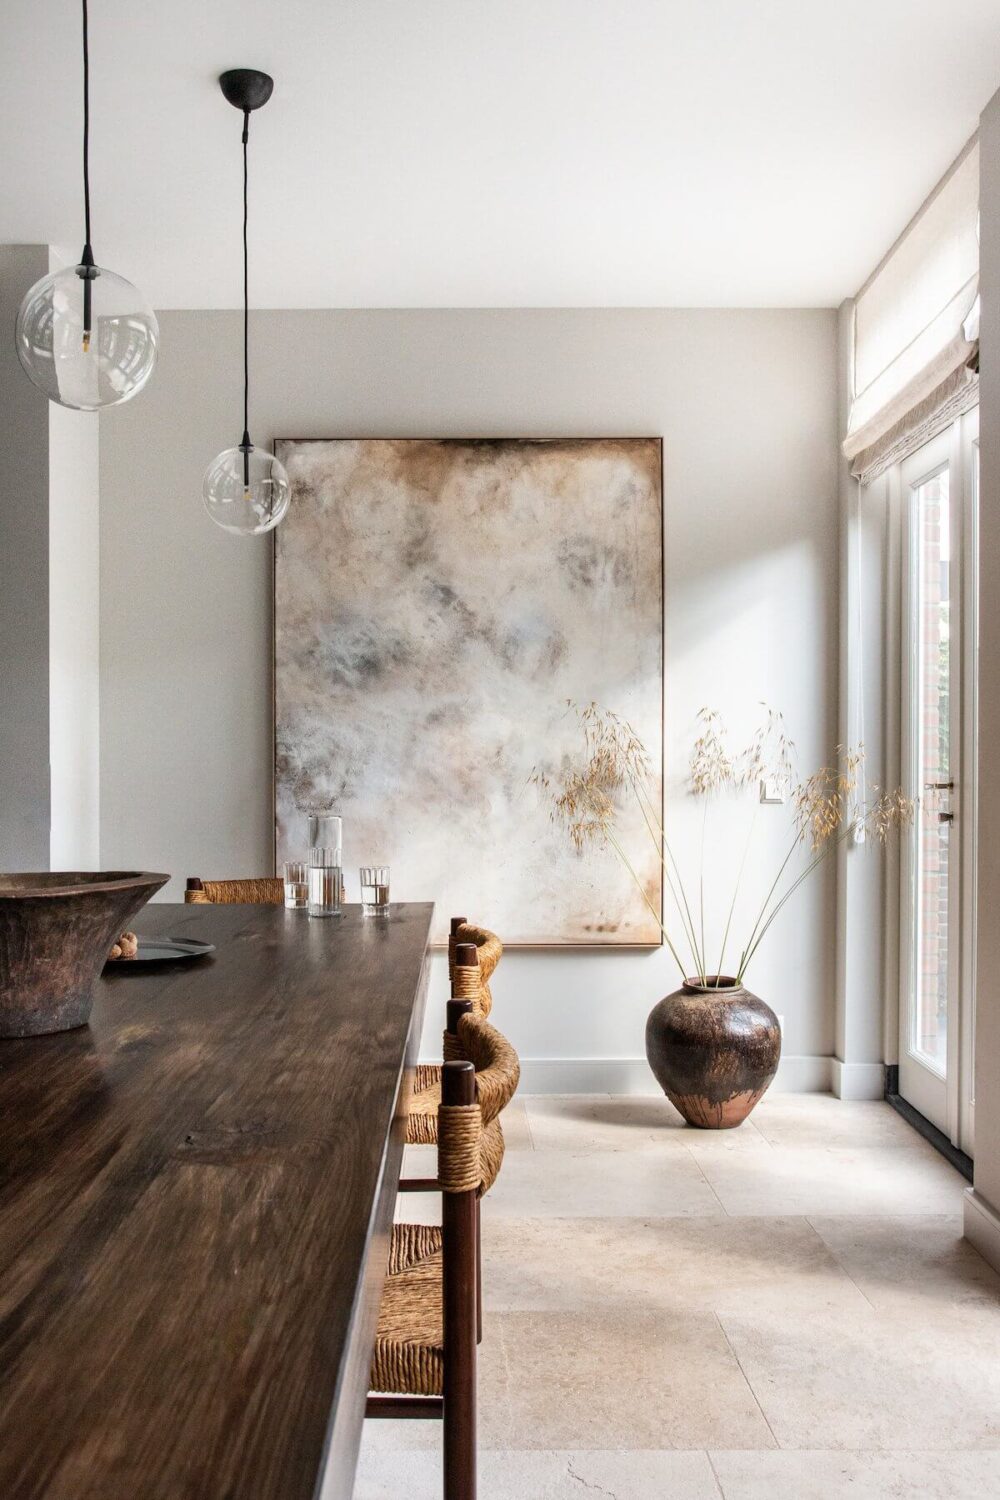 wooden-dining-table-large-artwork-avenue-design-studio-nordroom